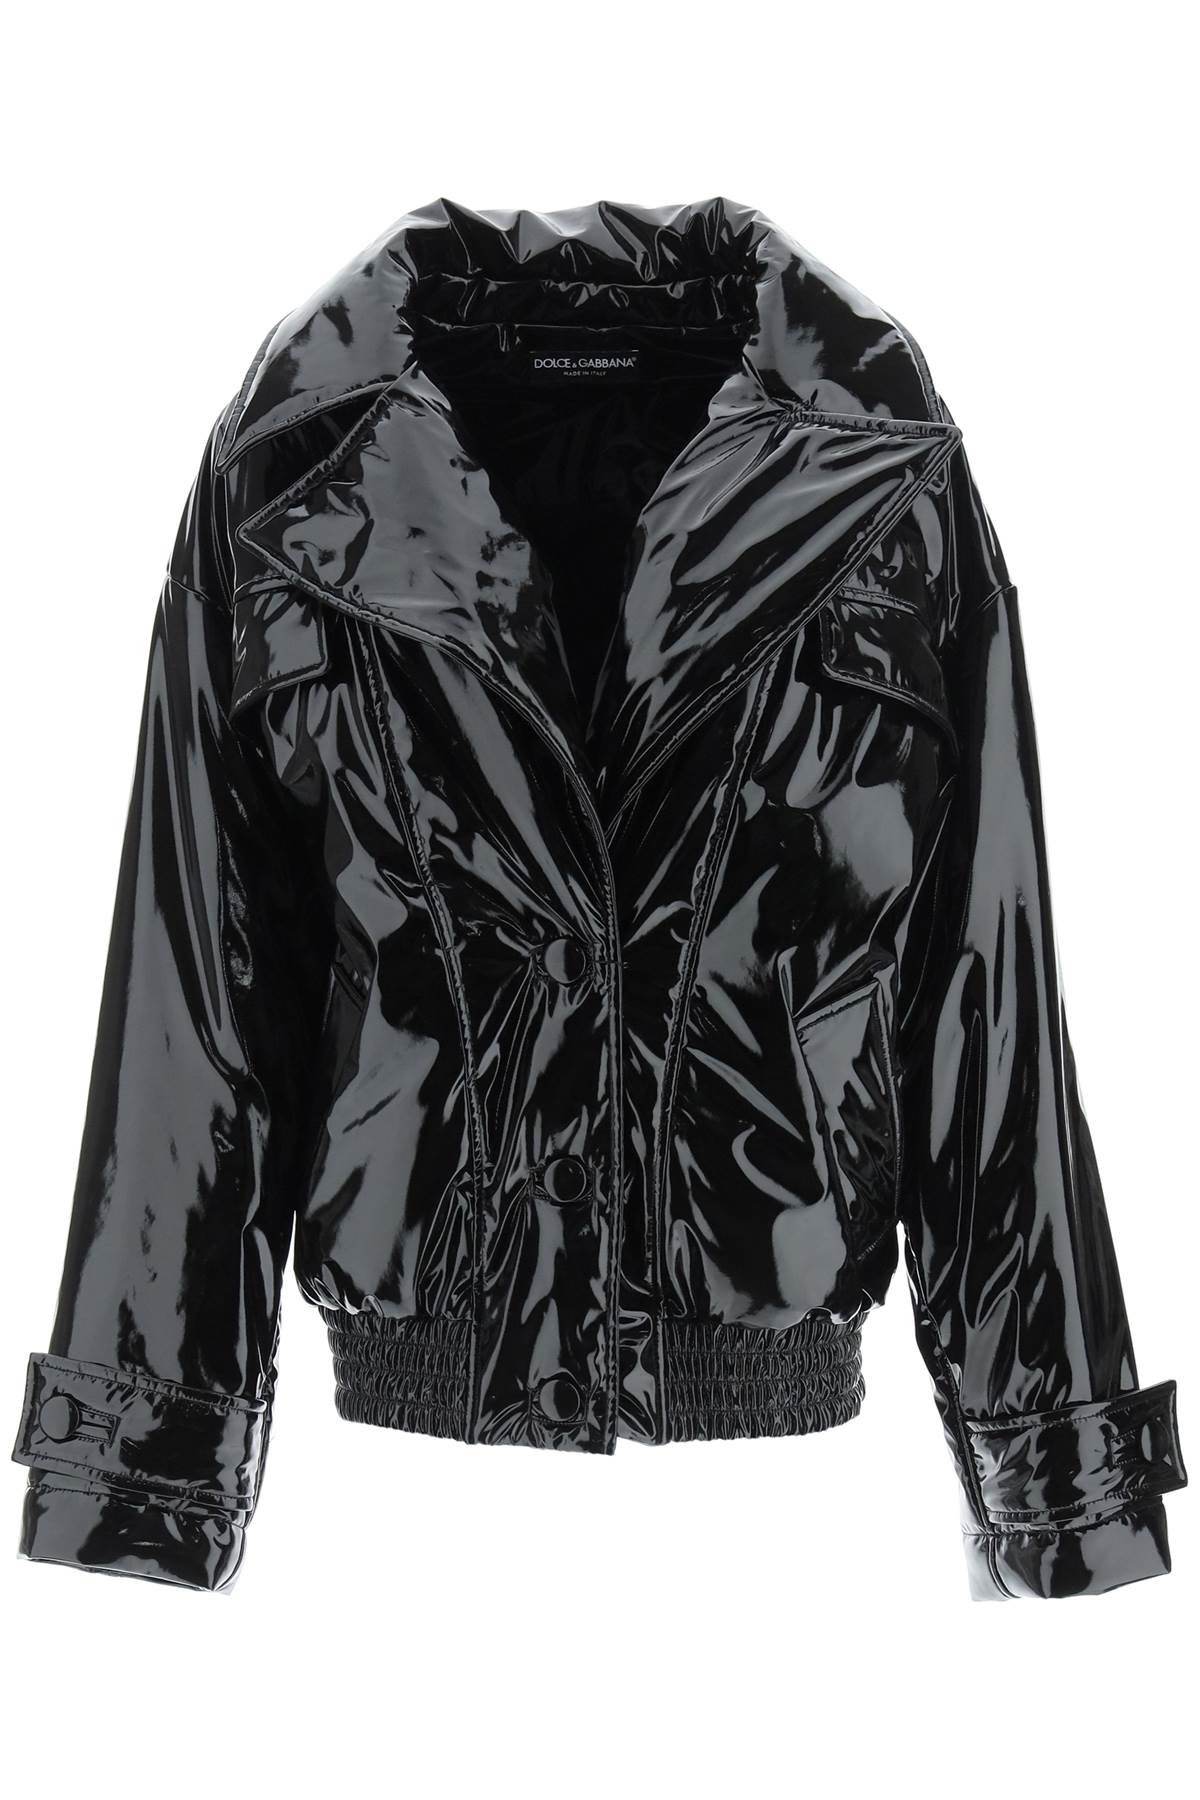 Dolce & Gabbana Patent Leather Jacket